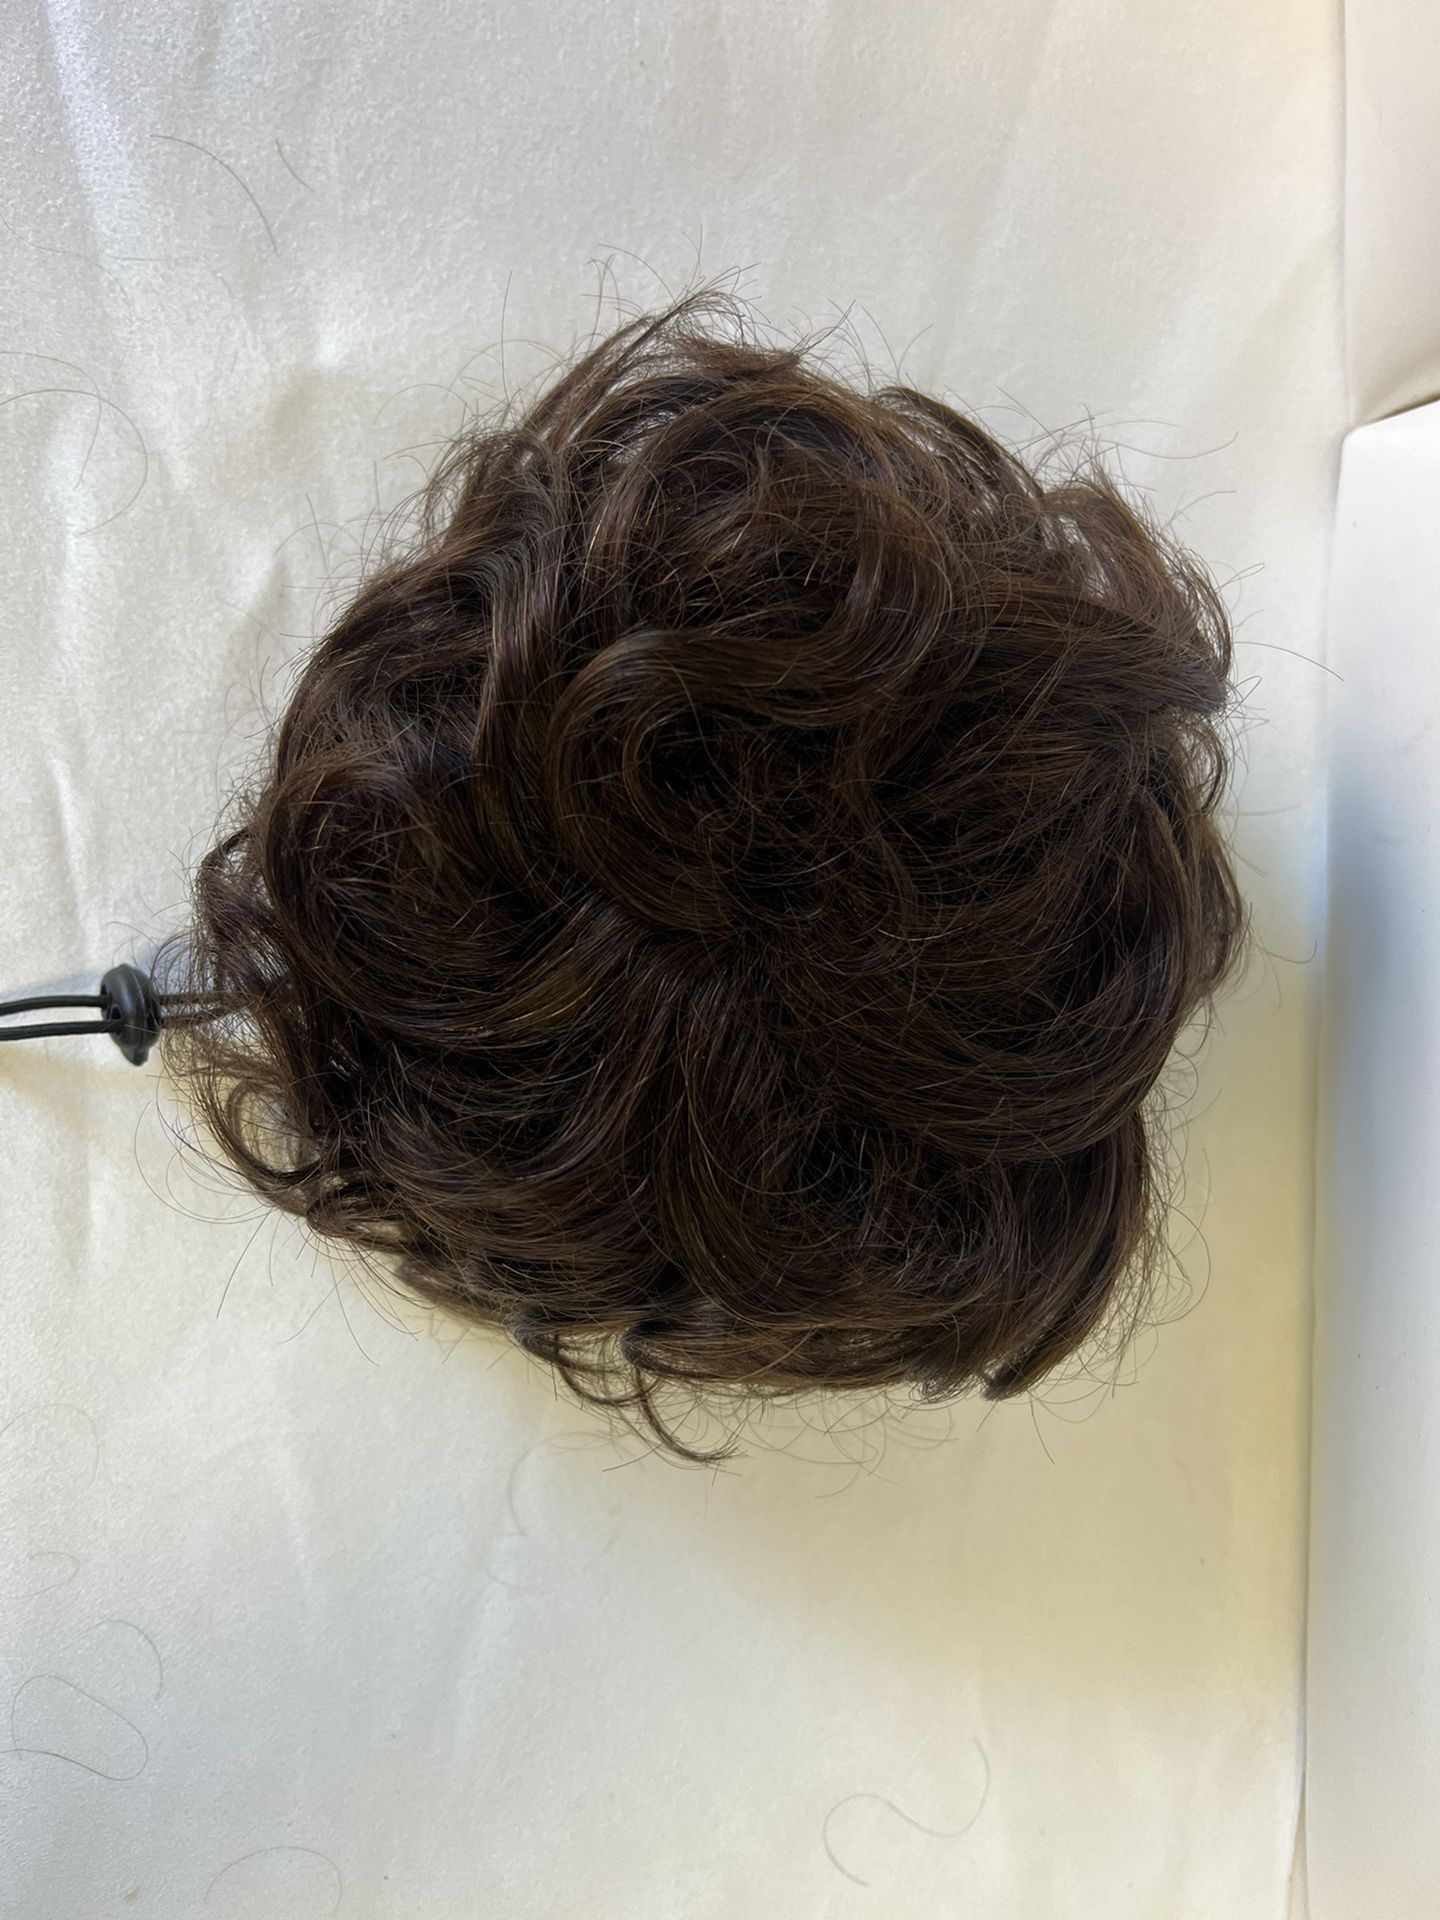 Human Hair Extensión Ponytail - New - Brown Color - $35 Pick Up Only - Cola De Cabello Coleta Extension De Pelo Humano Chongo Nueva 